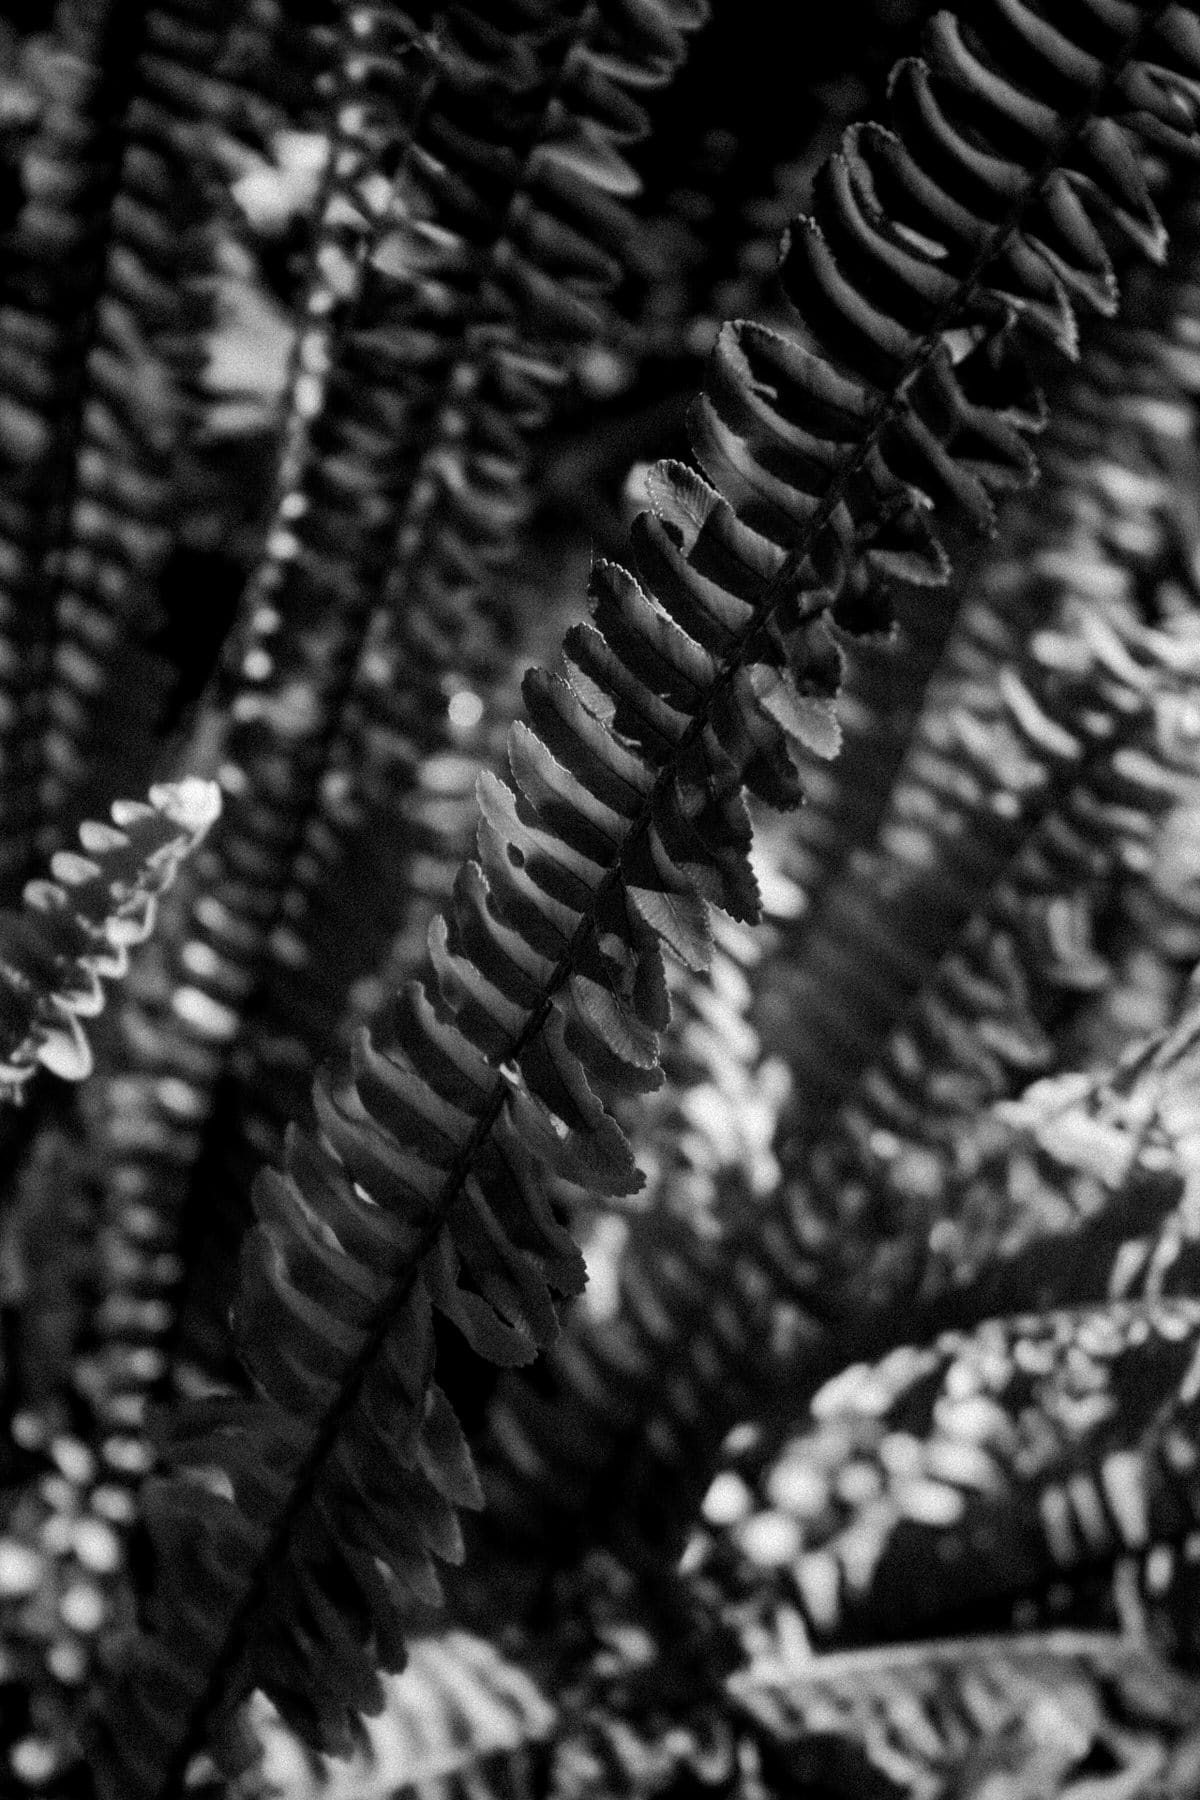 San-Diego-Zoo-San-Diego-California-black-and-white-fine-art-photography-by-Studio-L-photographer-Laura-Schneider-_2676